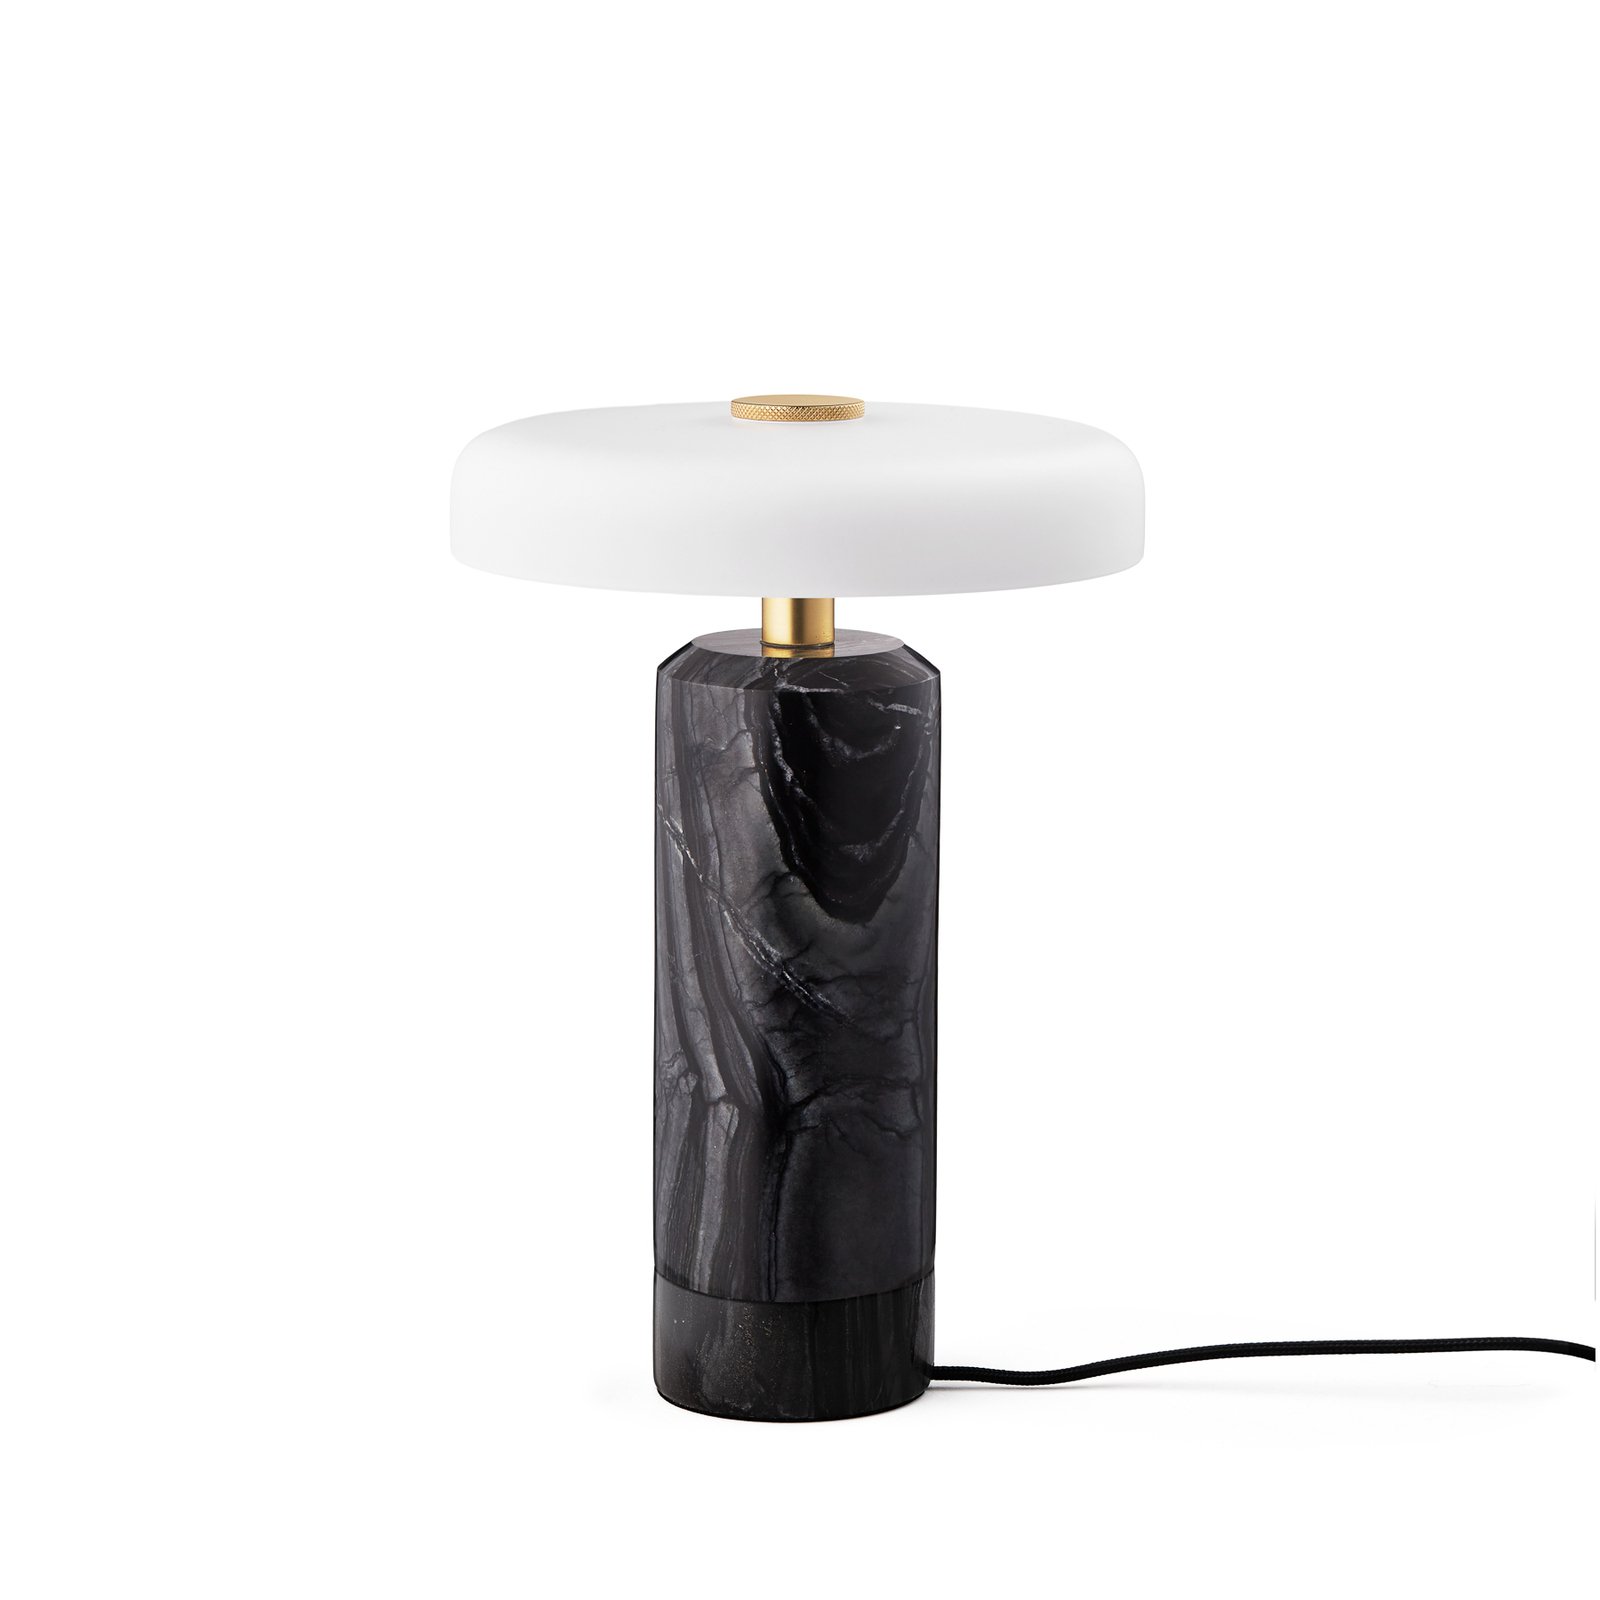 Akumulatorowa lampa stołowa Trip LED, szara / biała, marmur, szkło, IP44